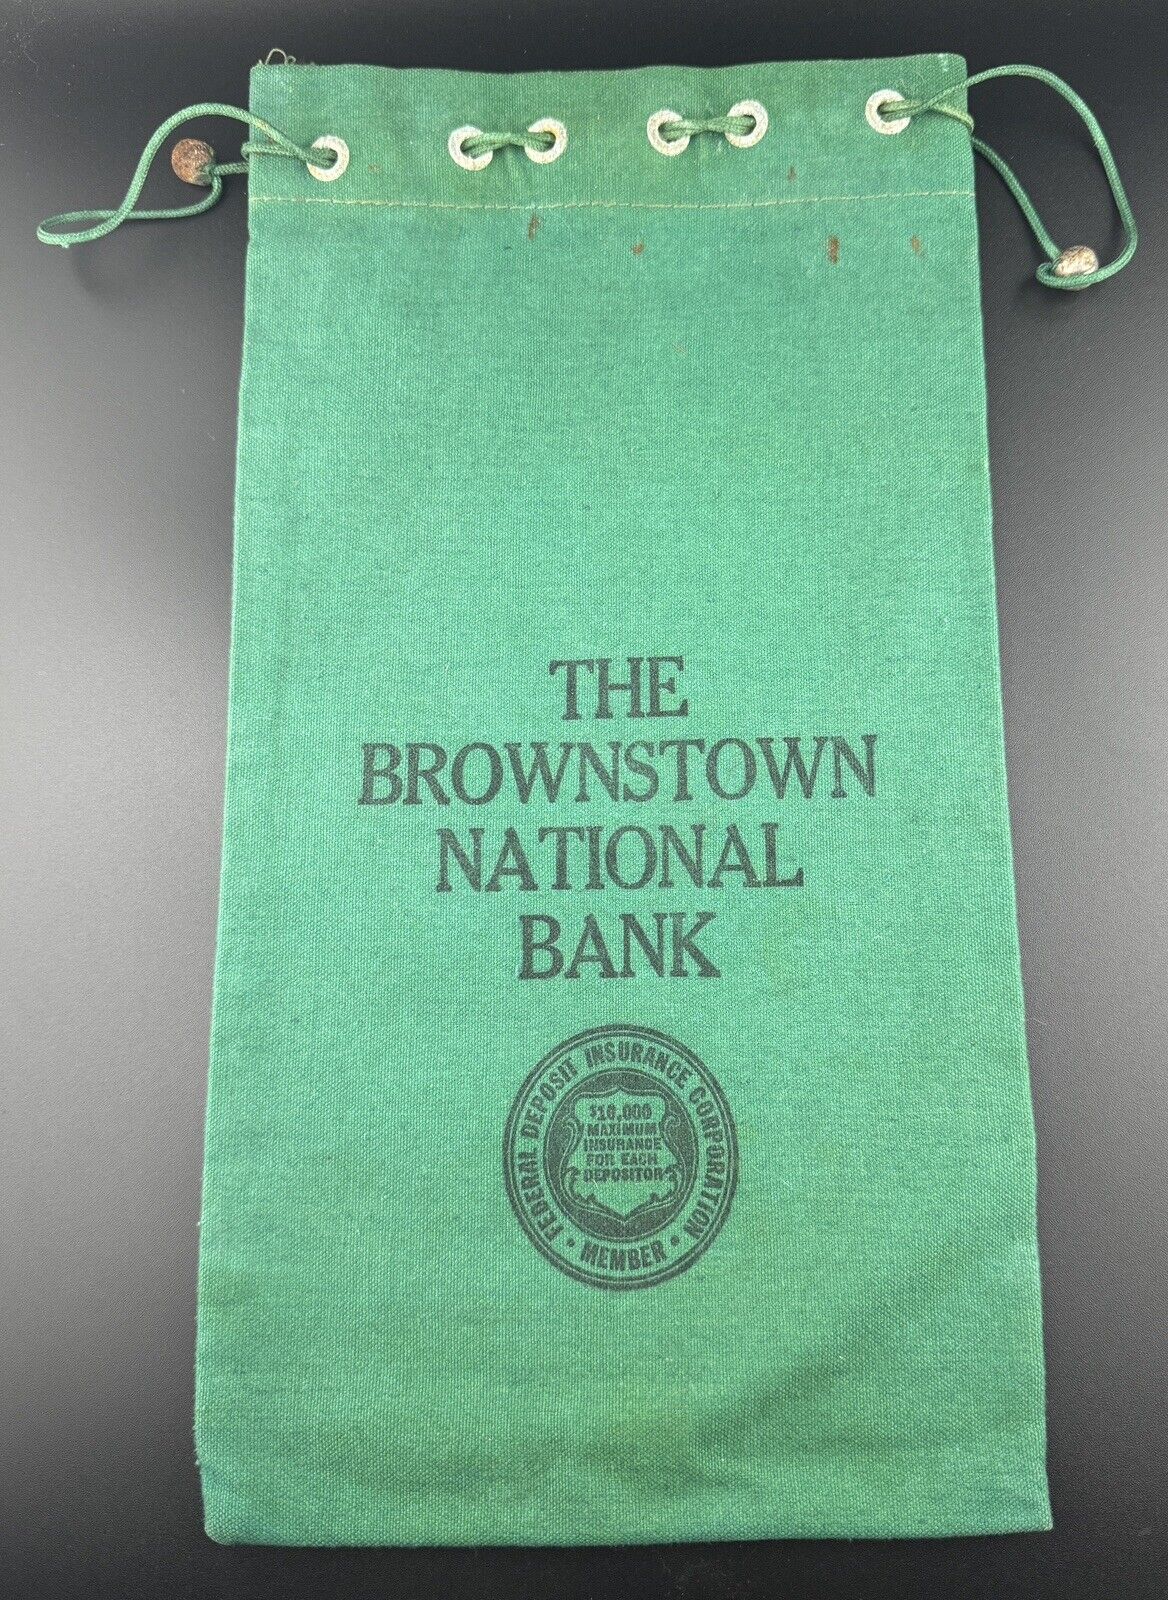 Vintage Bank Bag The Brownstown National Bank Pennsylvania